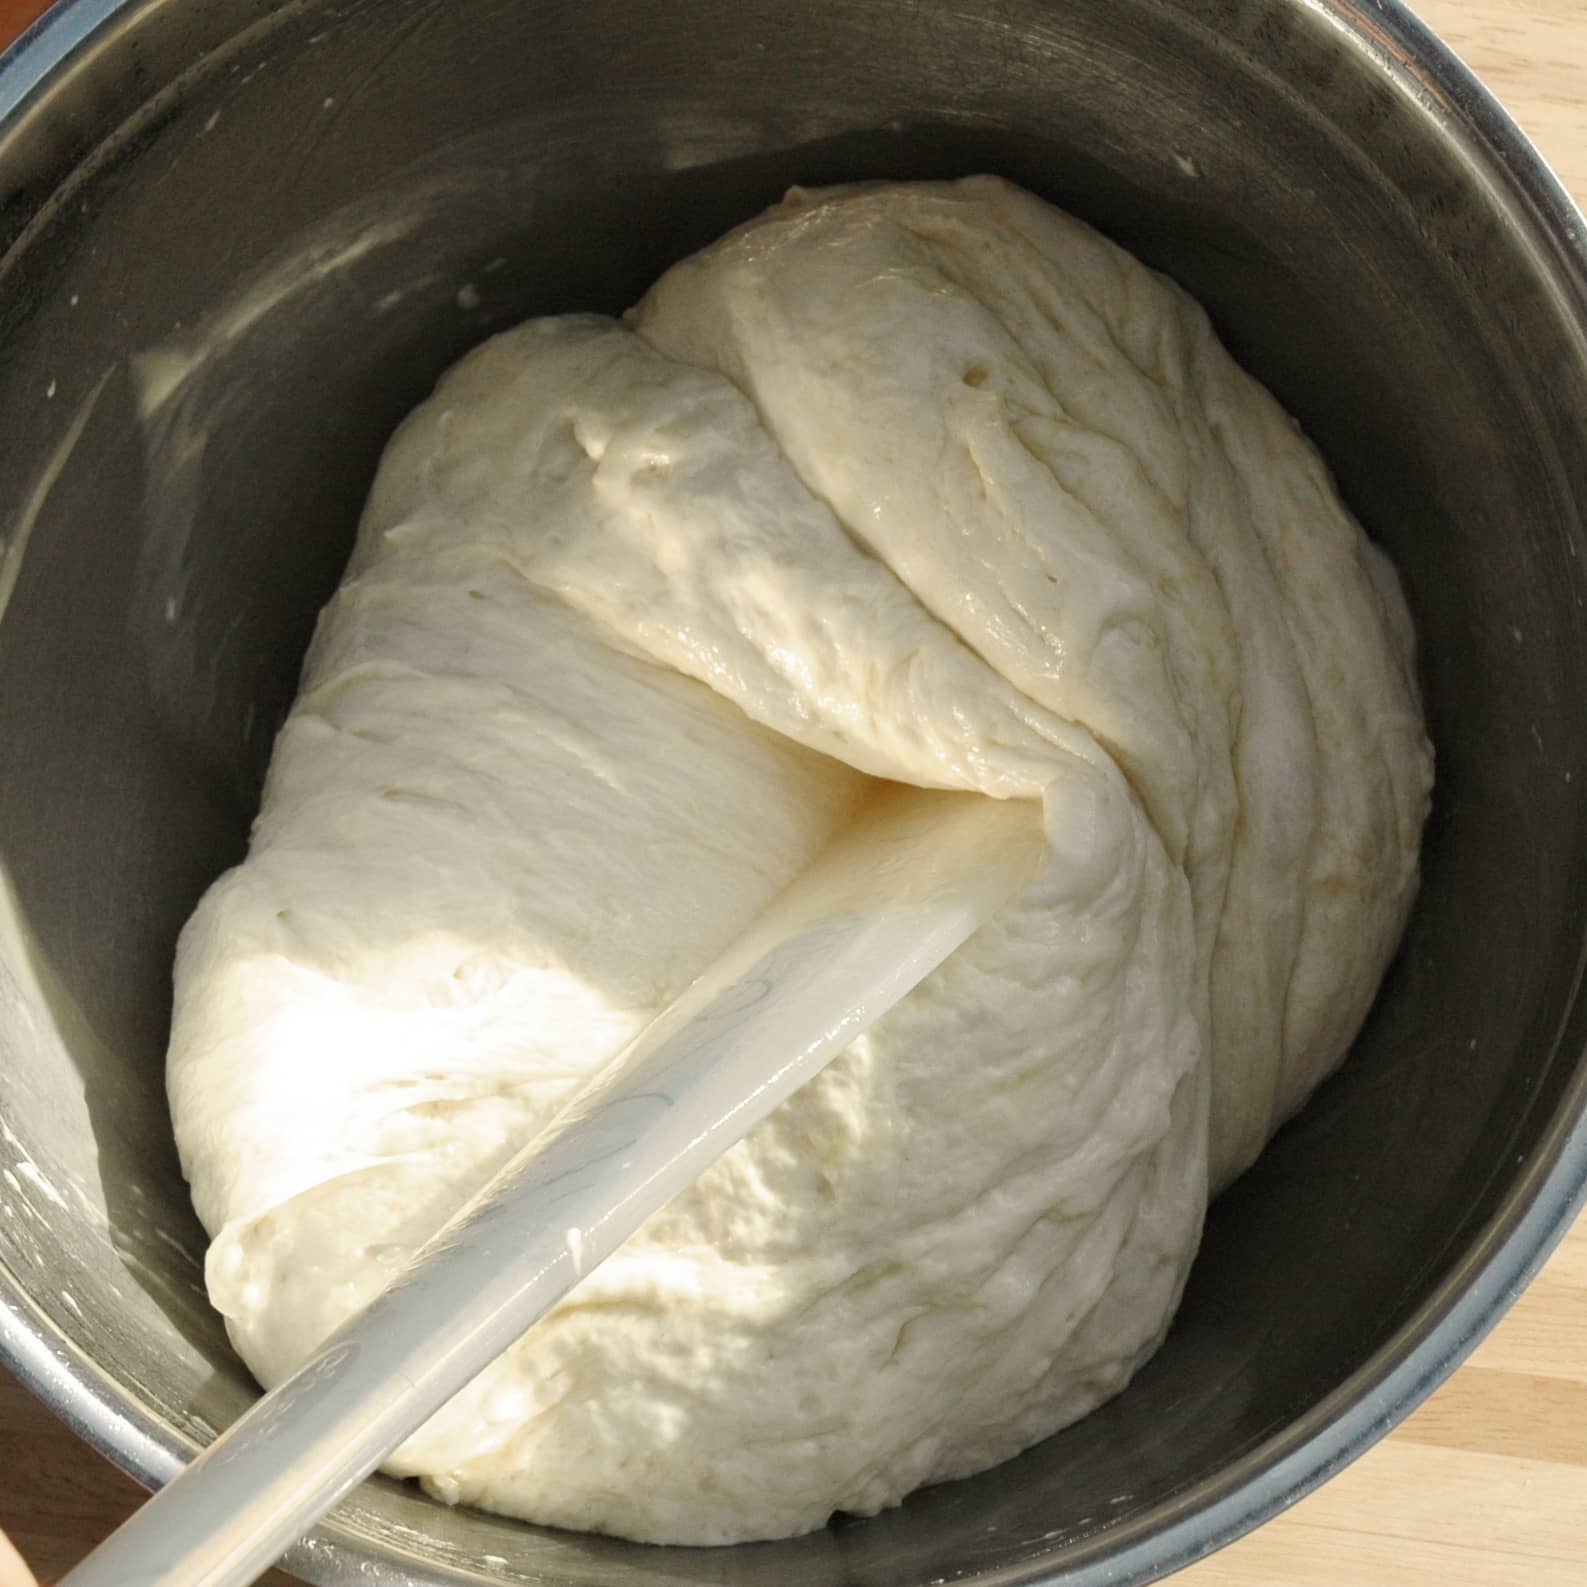 Mixing the main dough